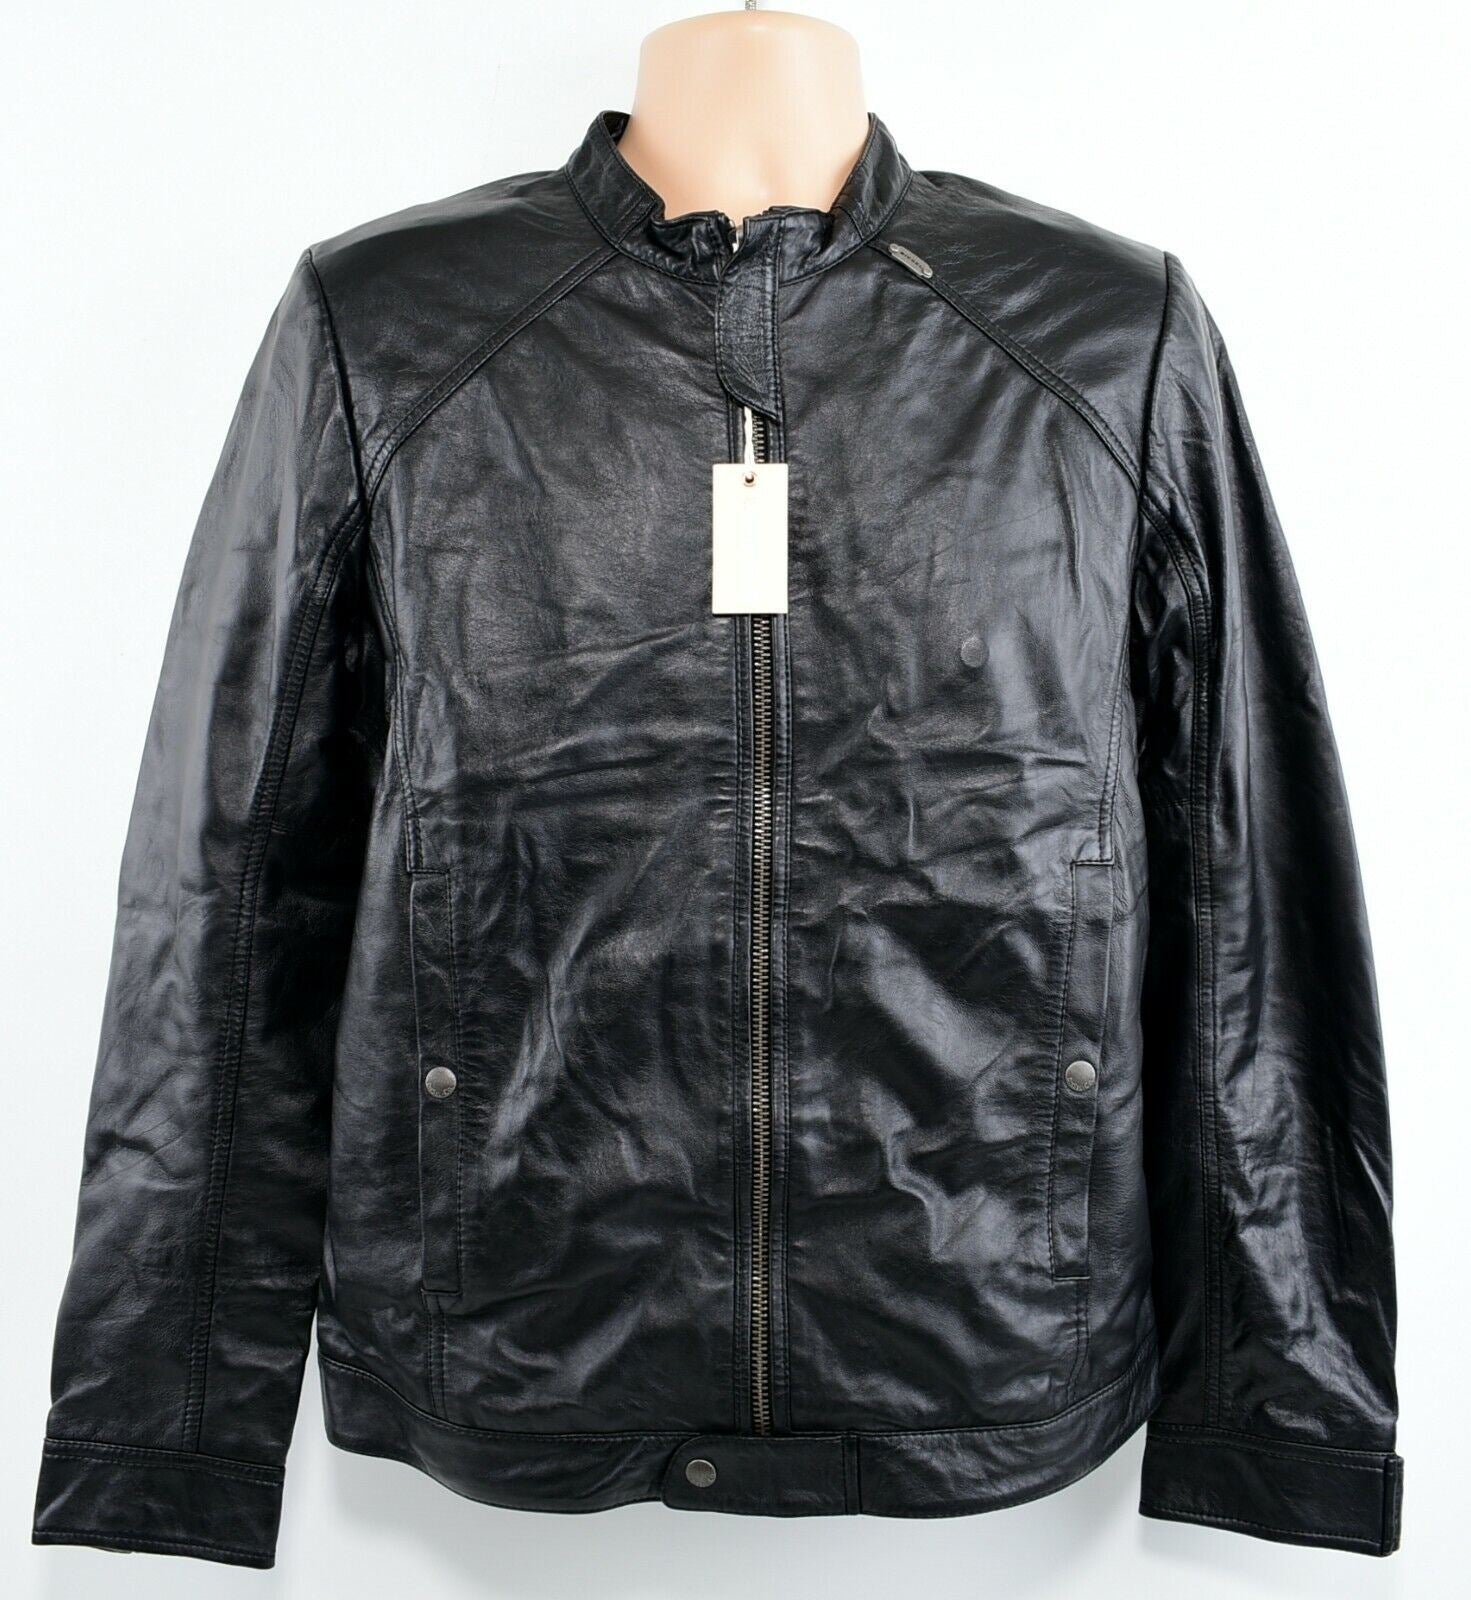 DIESEL Men's Black Genuine Leather Jacket, size M